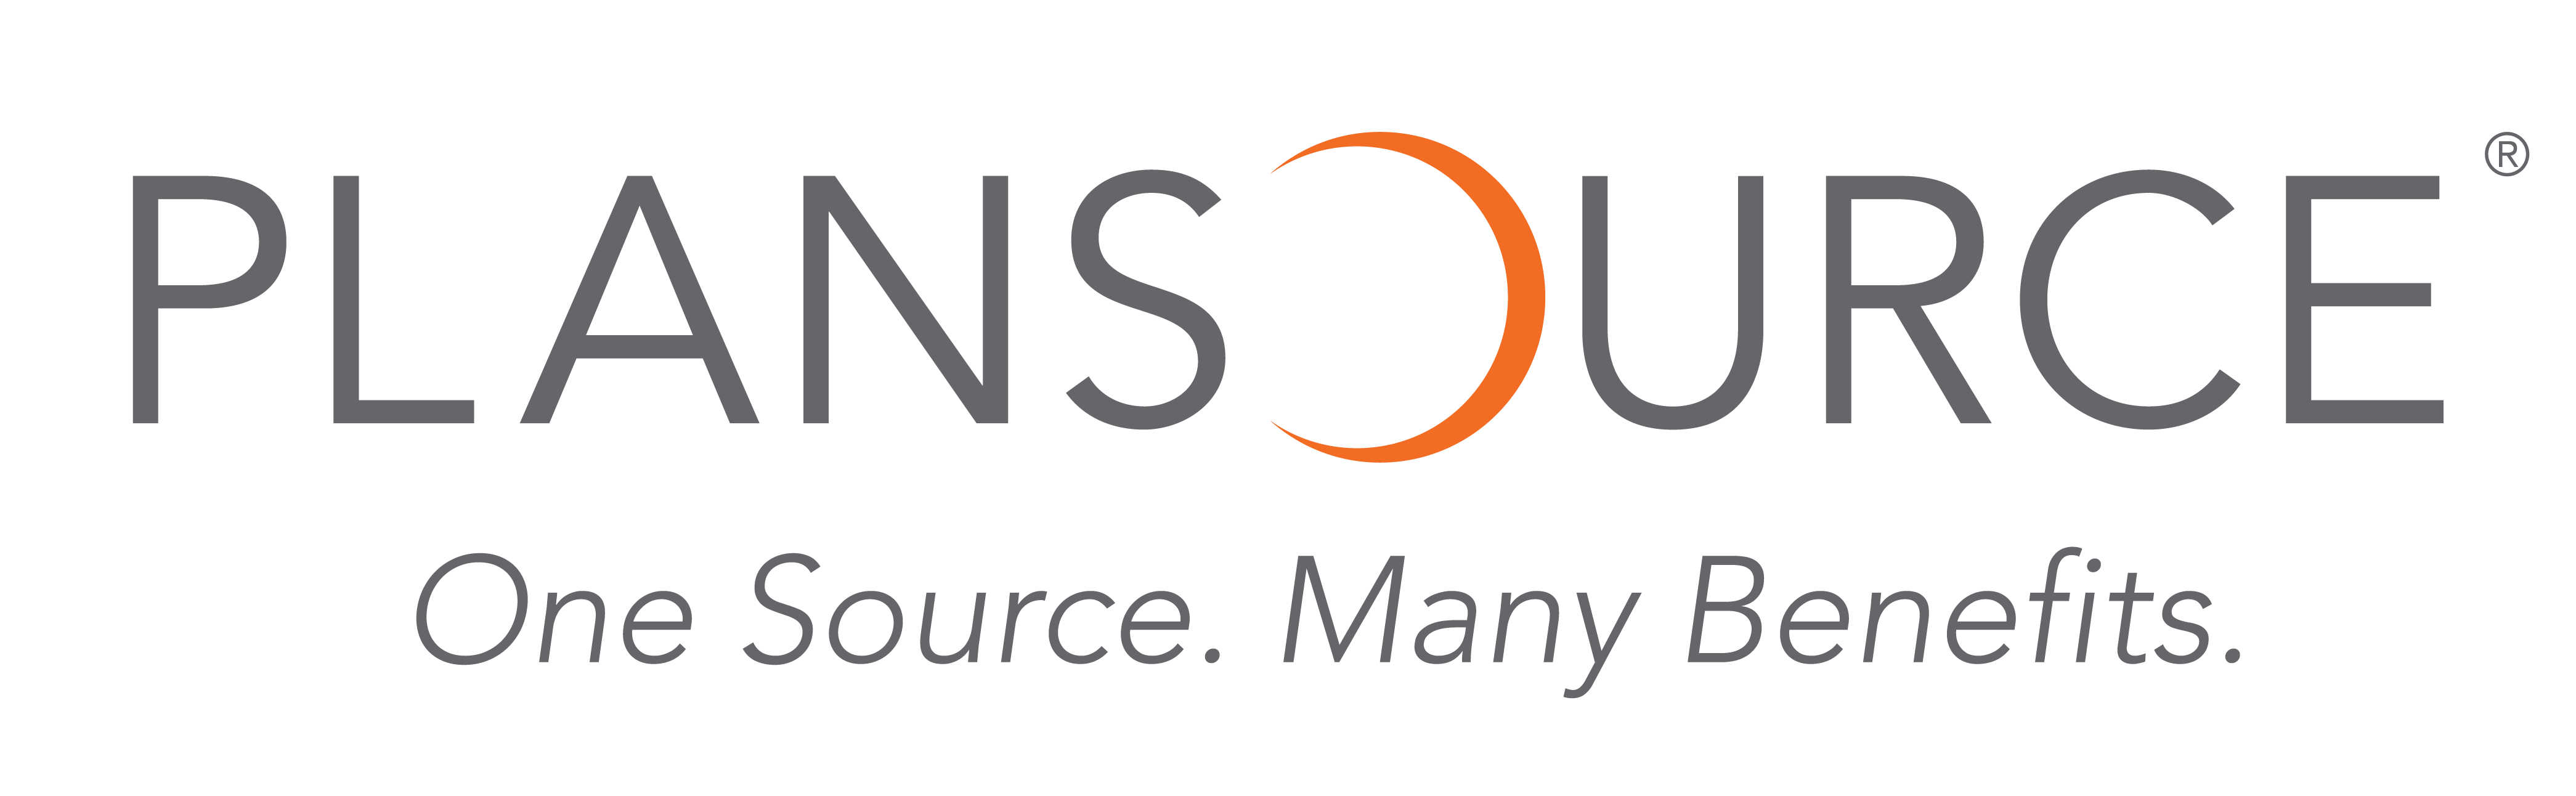 PlanSource Financial Services, Inc. logo